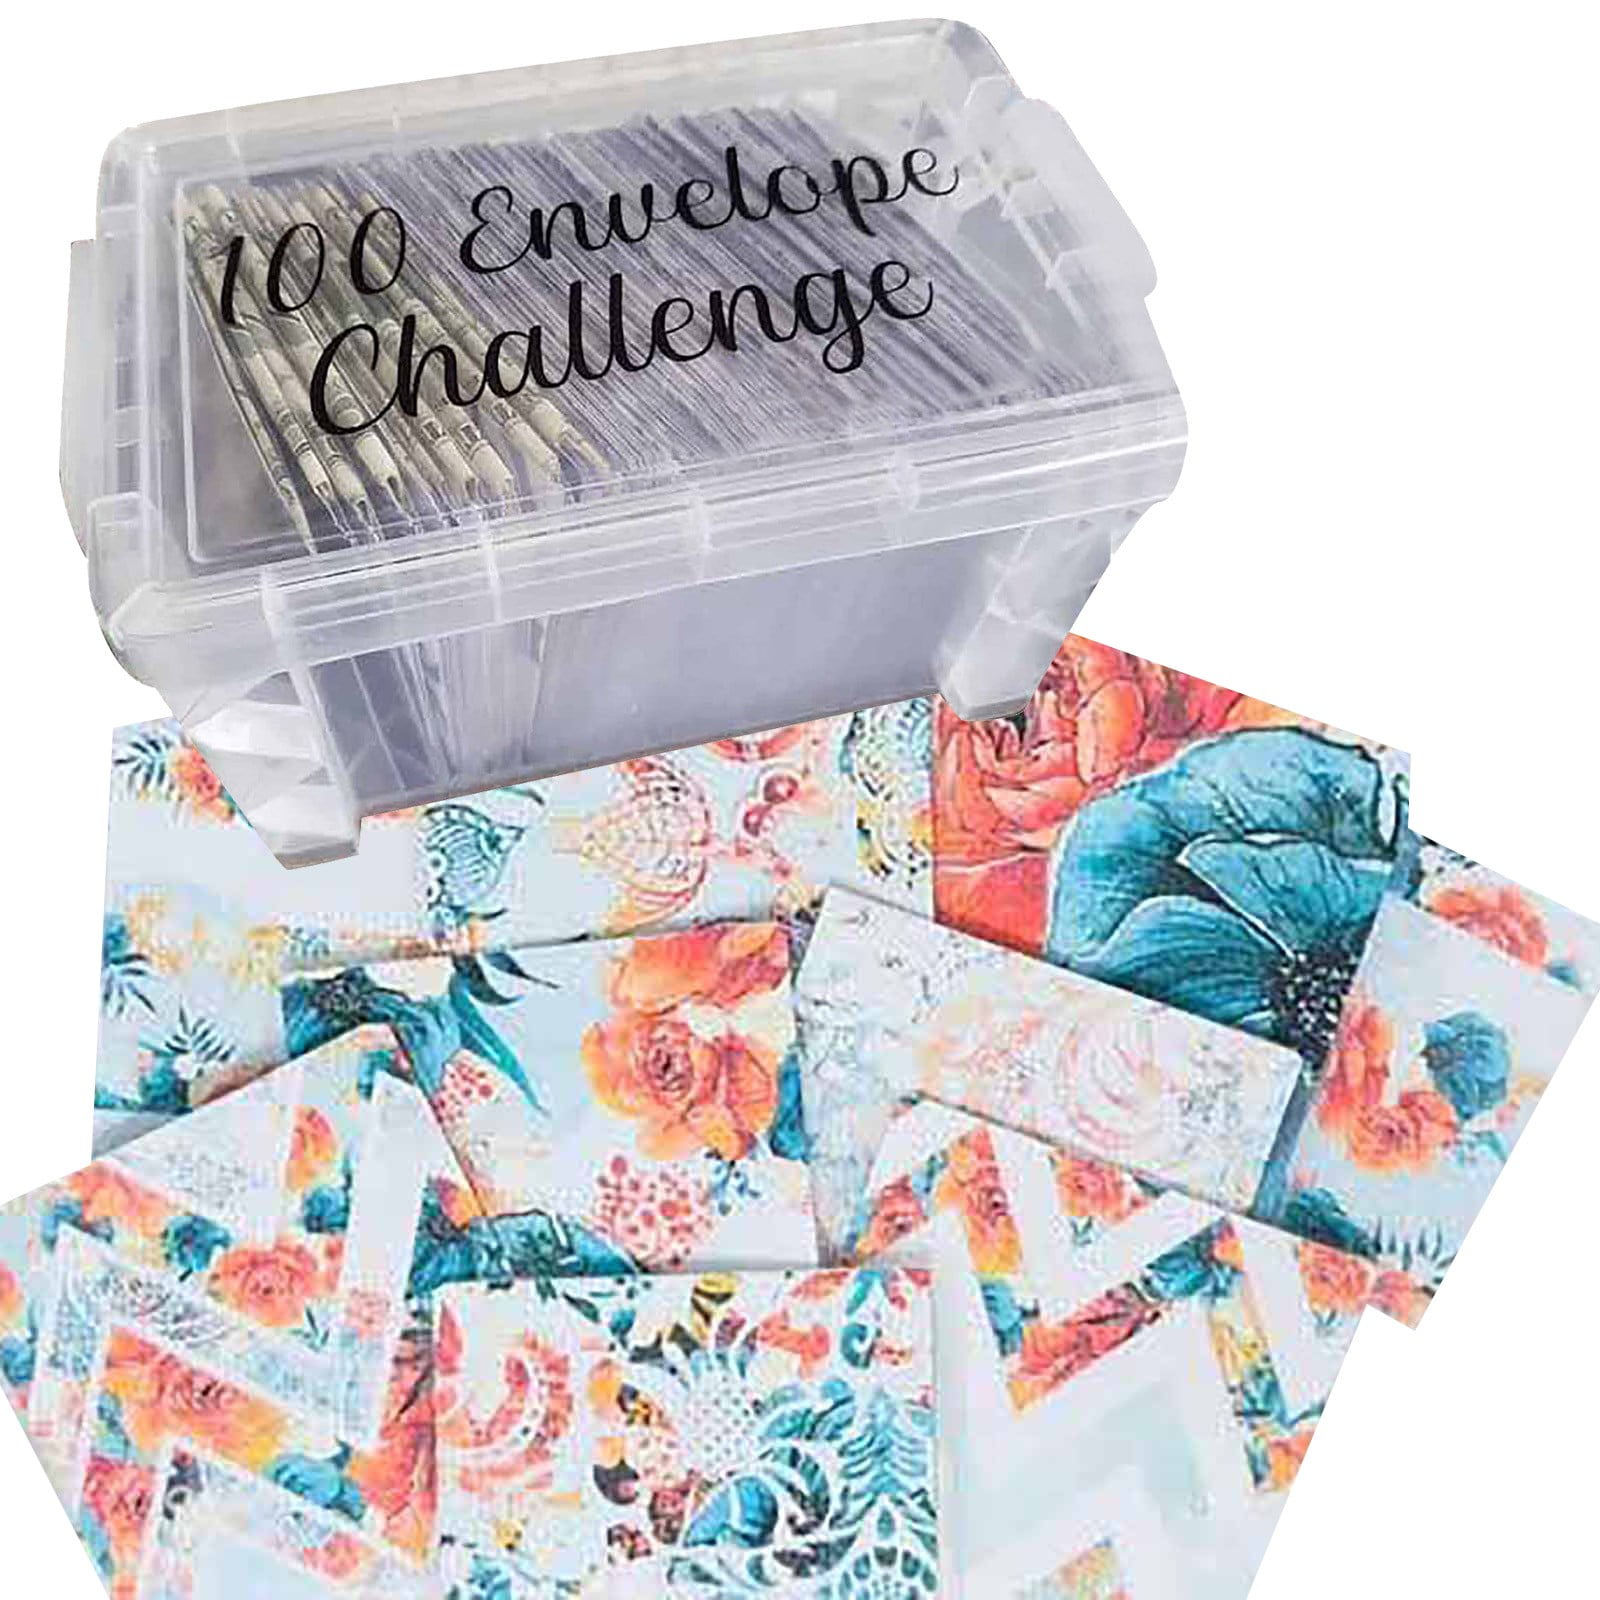 100 Envelope Challenge Binder with Storage Box, Easy and Fun Way to Save  $5,050, Money Box & Money Envelopes for Cash Saving Saving Challenge Book